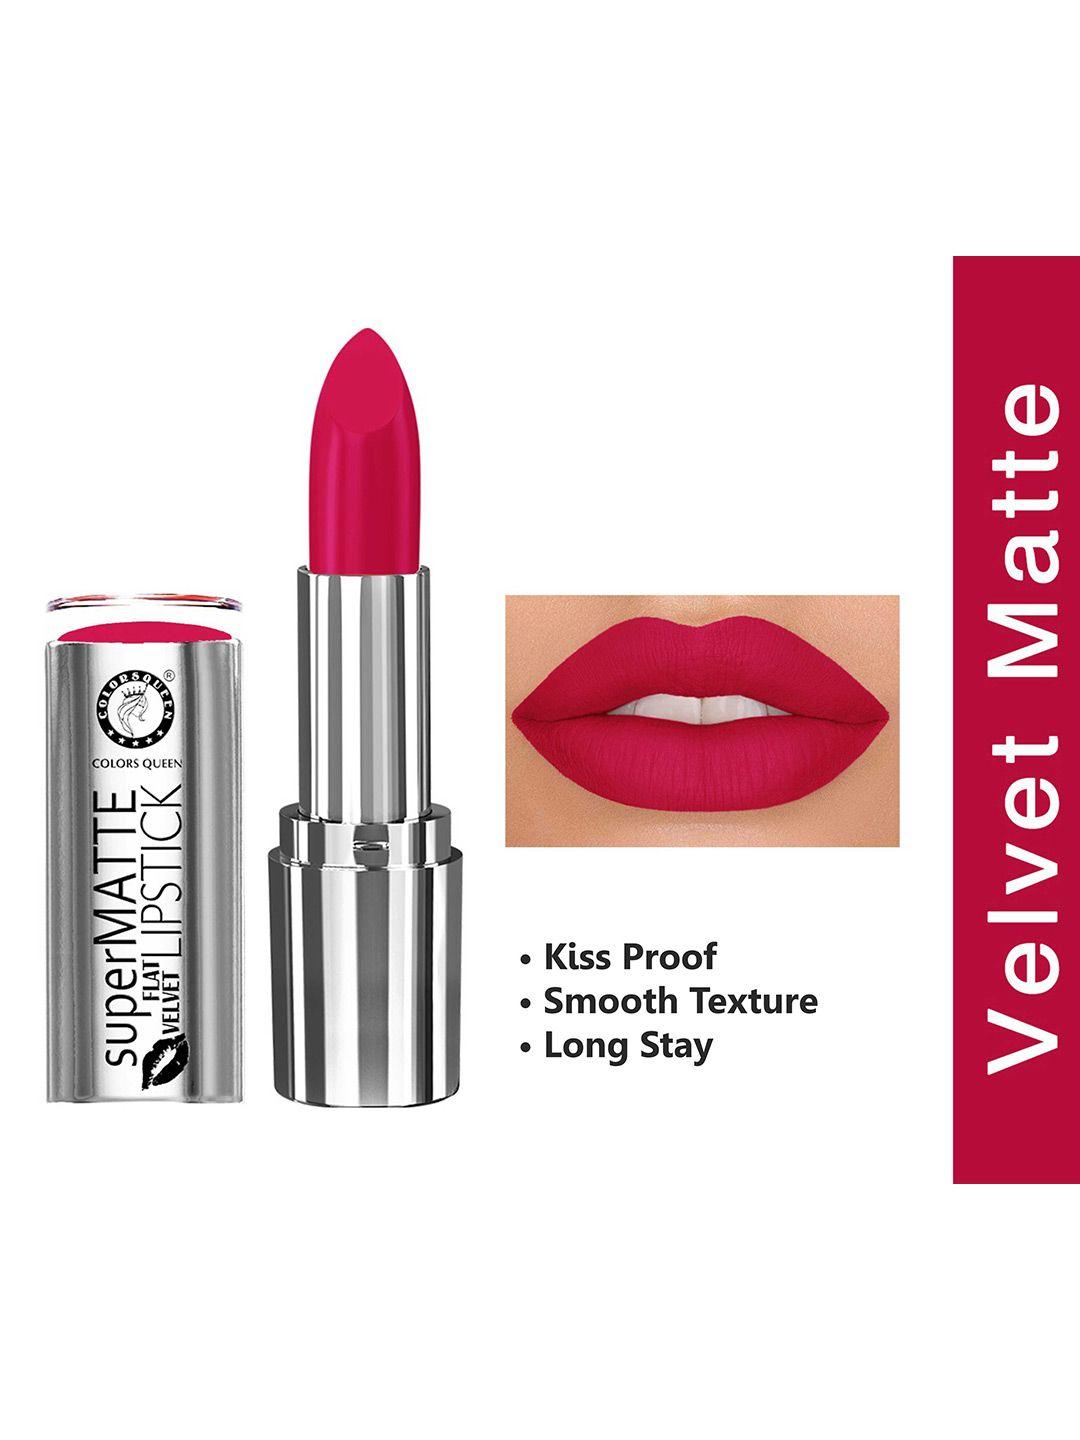 colors queen super matte flat velvet lipstick 7 g - royal pink 14